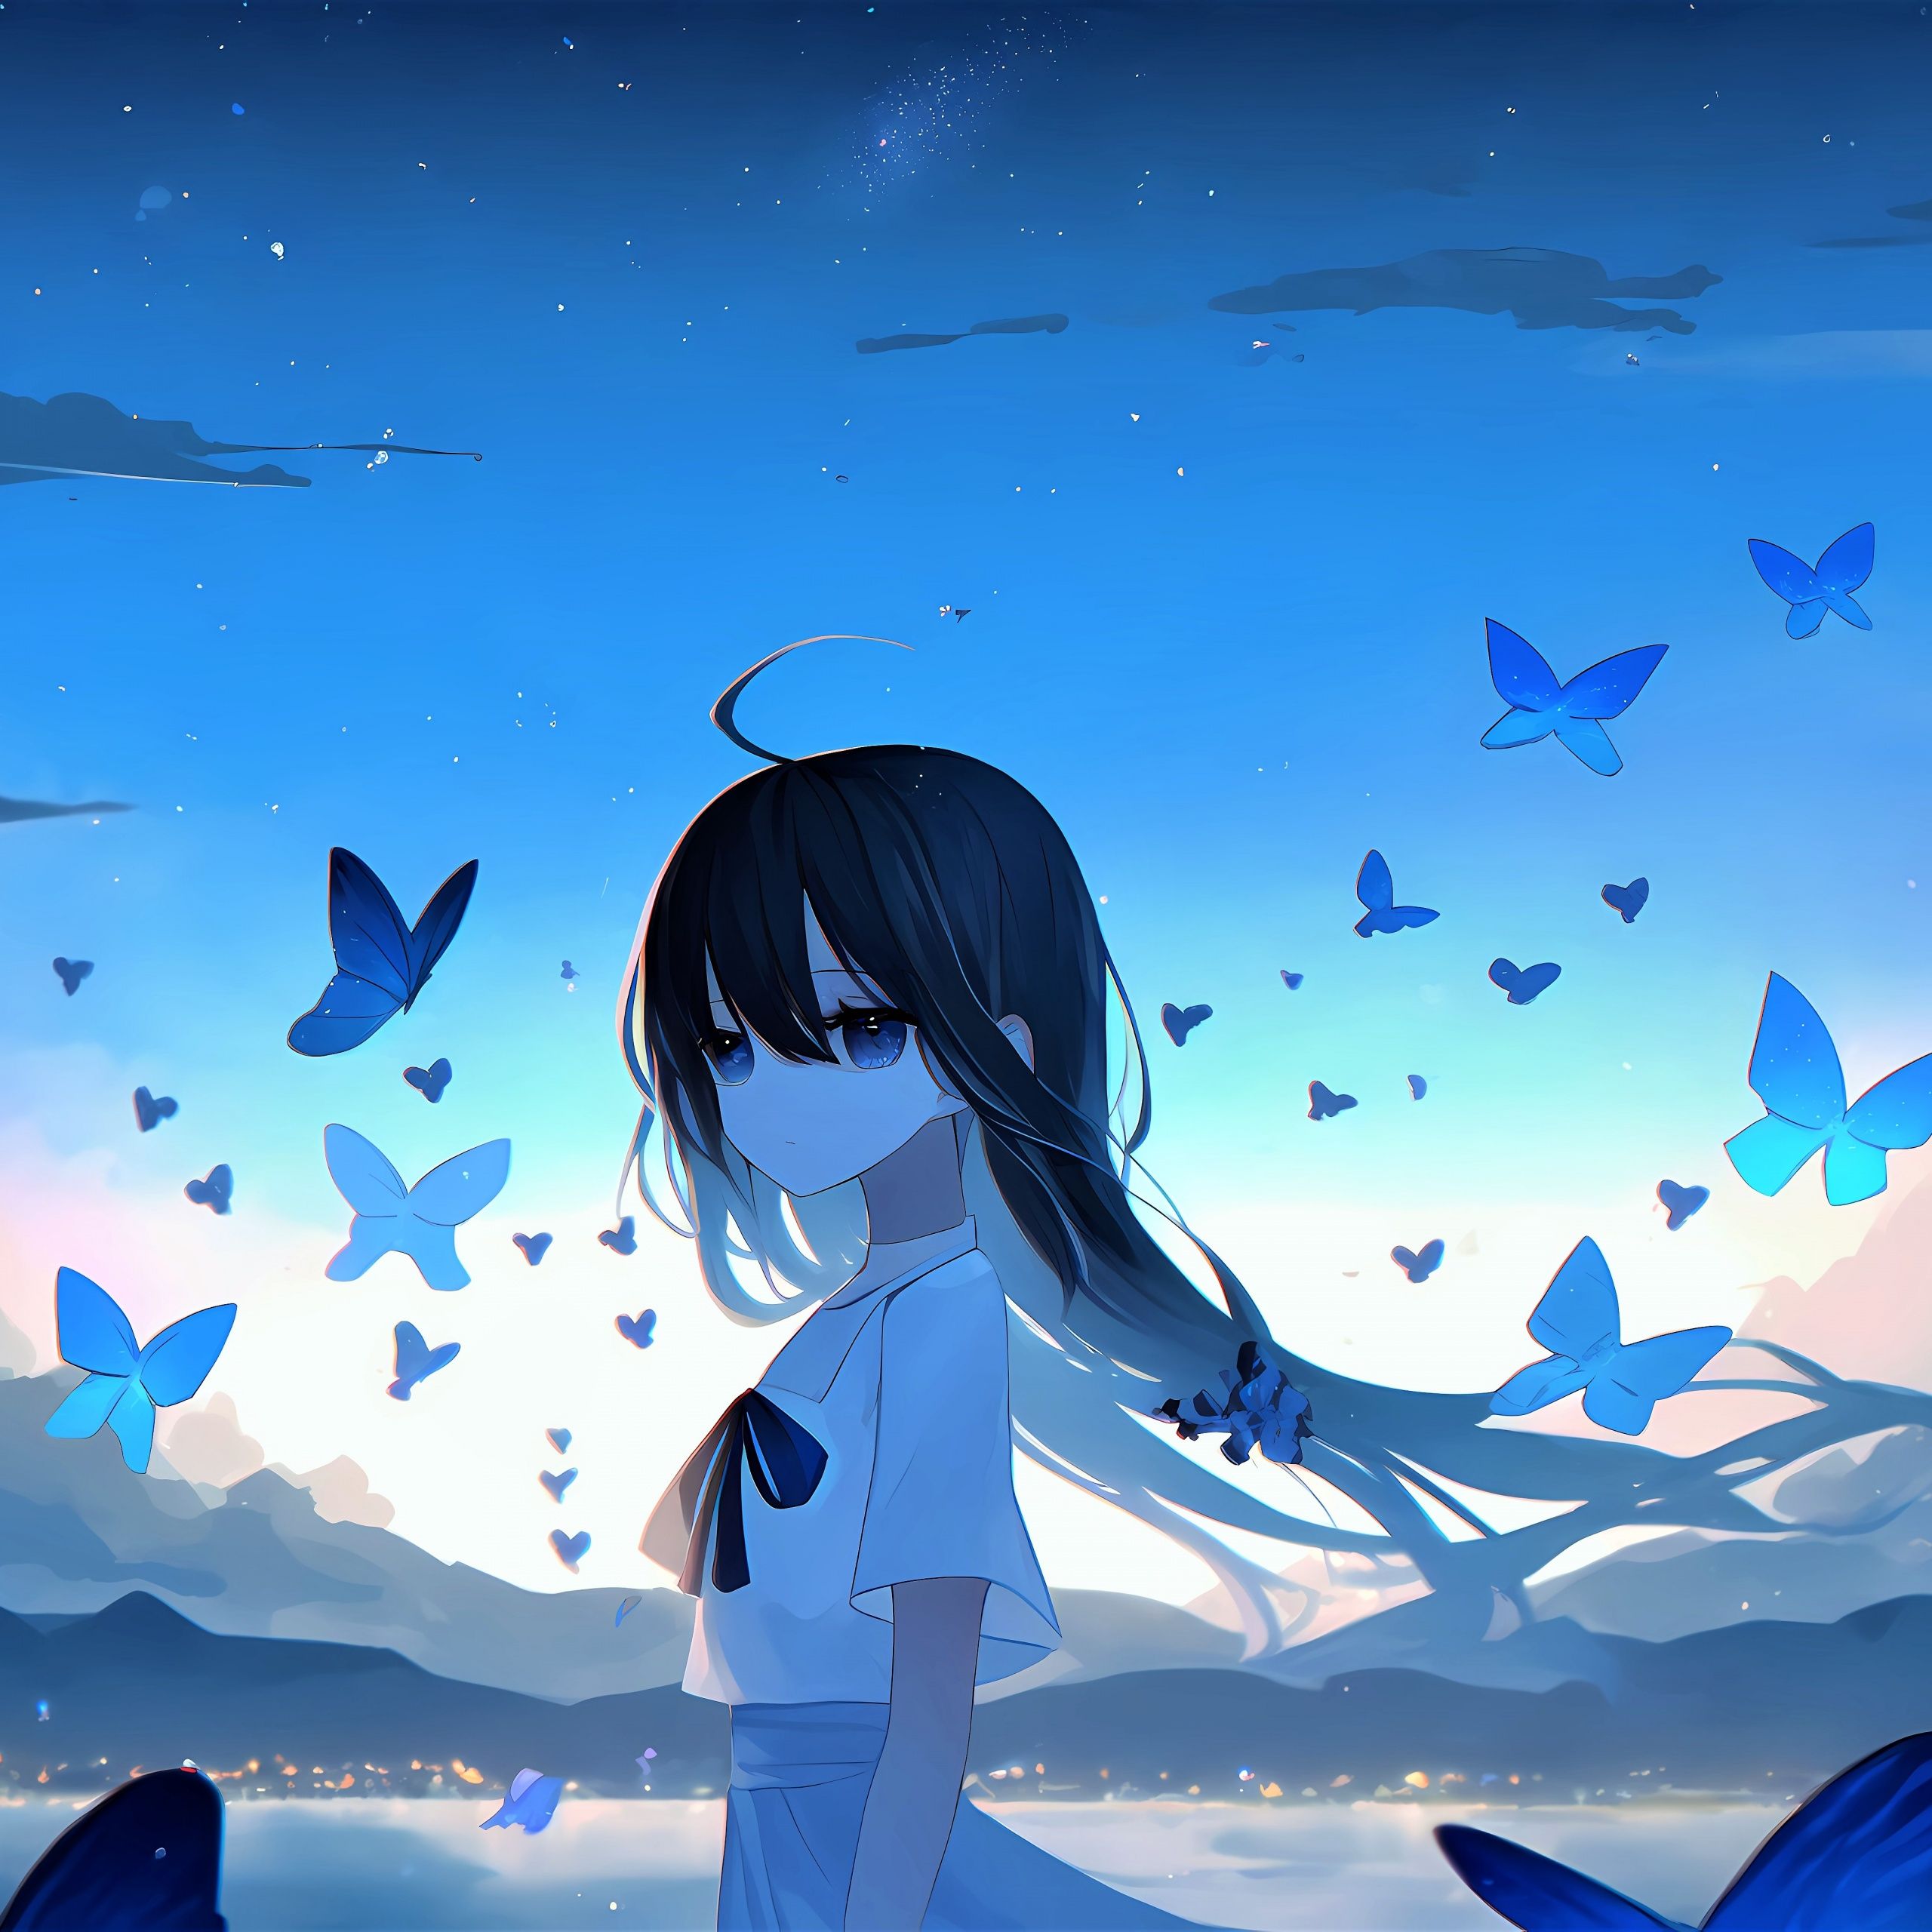 Sad girl Wallpaper 4K, Anime girl, Mood, Butterflies